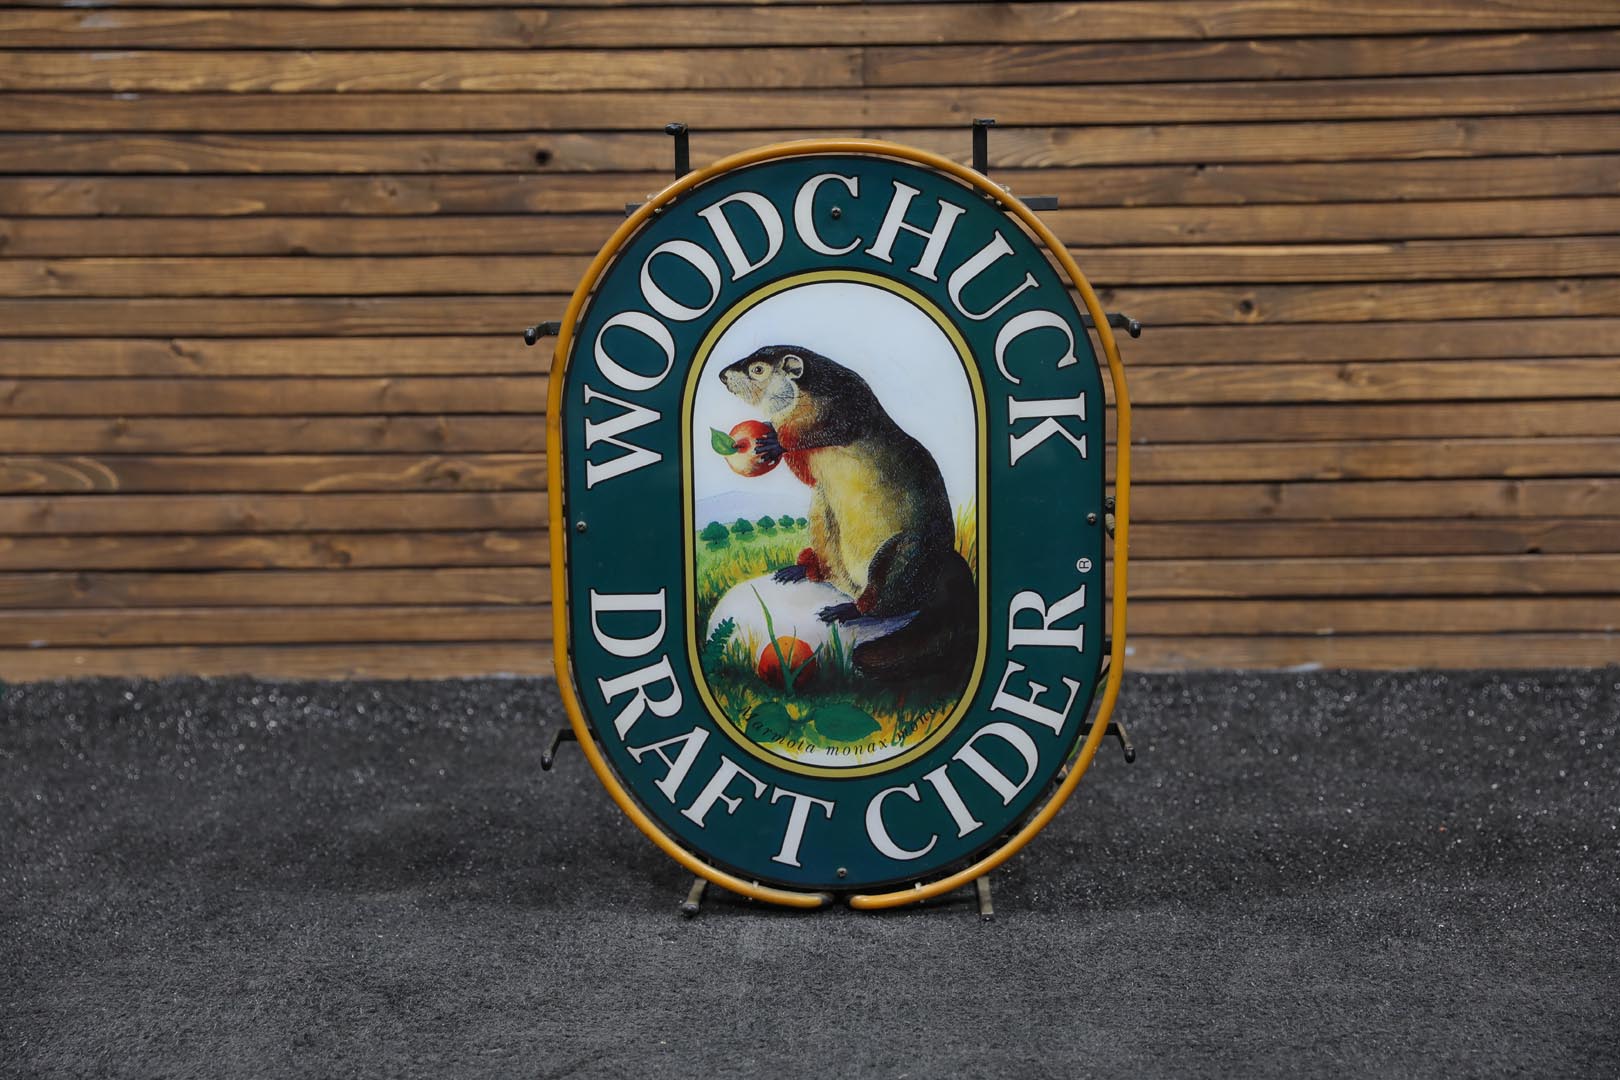  Woodchuck Draft Cider Neon Sig n 